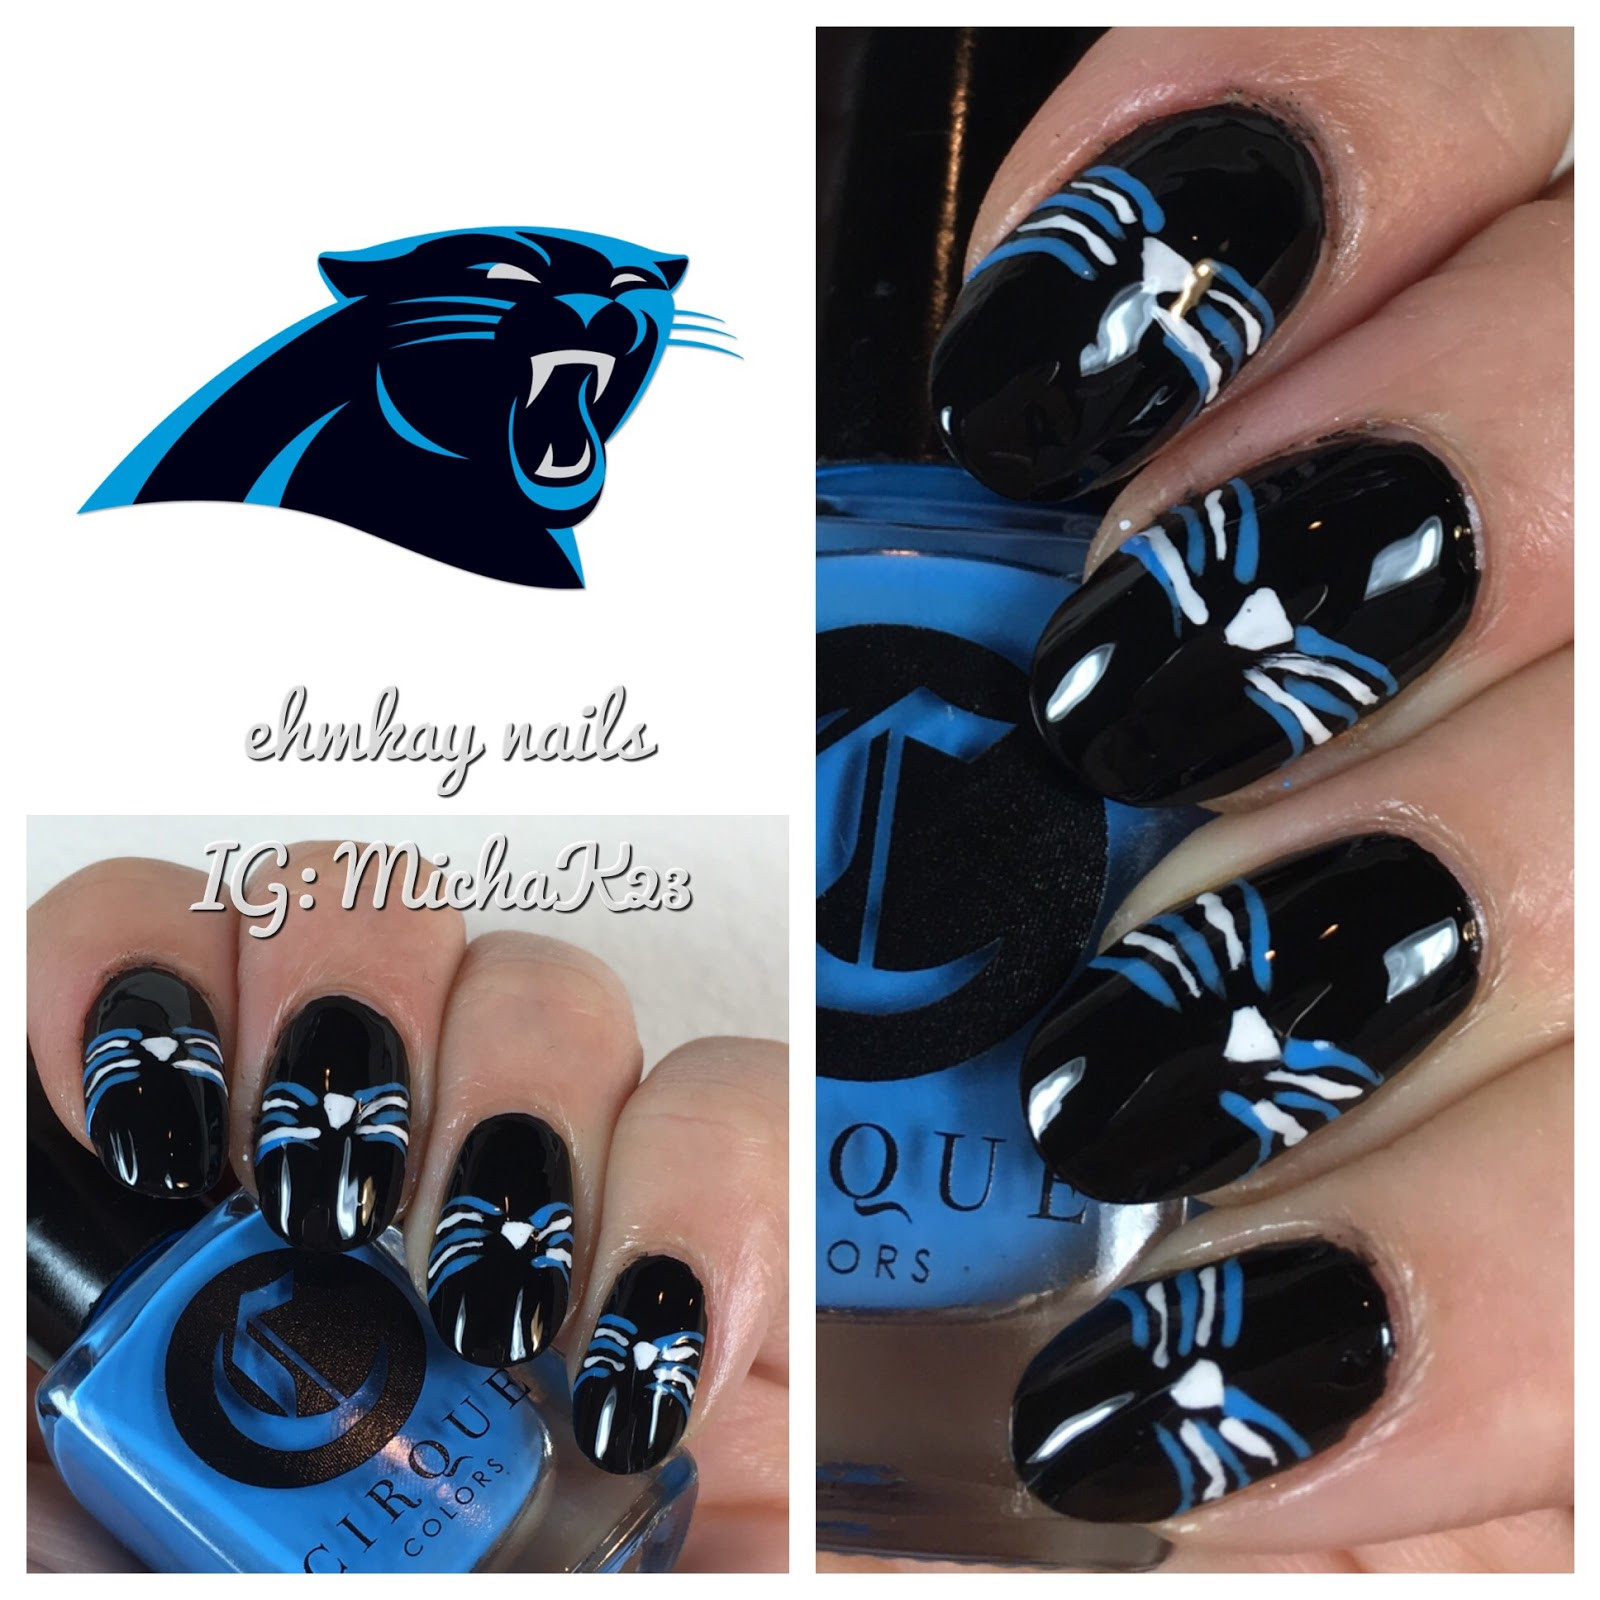 Carolina Panthers Nail Designs
 ehmkay nails Super Bowl Nail Art Carolina Panthers Nail Art